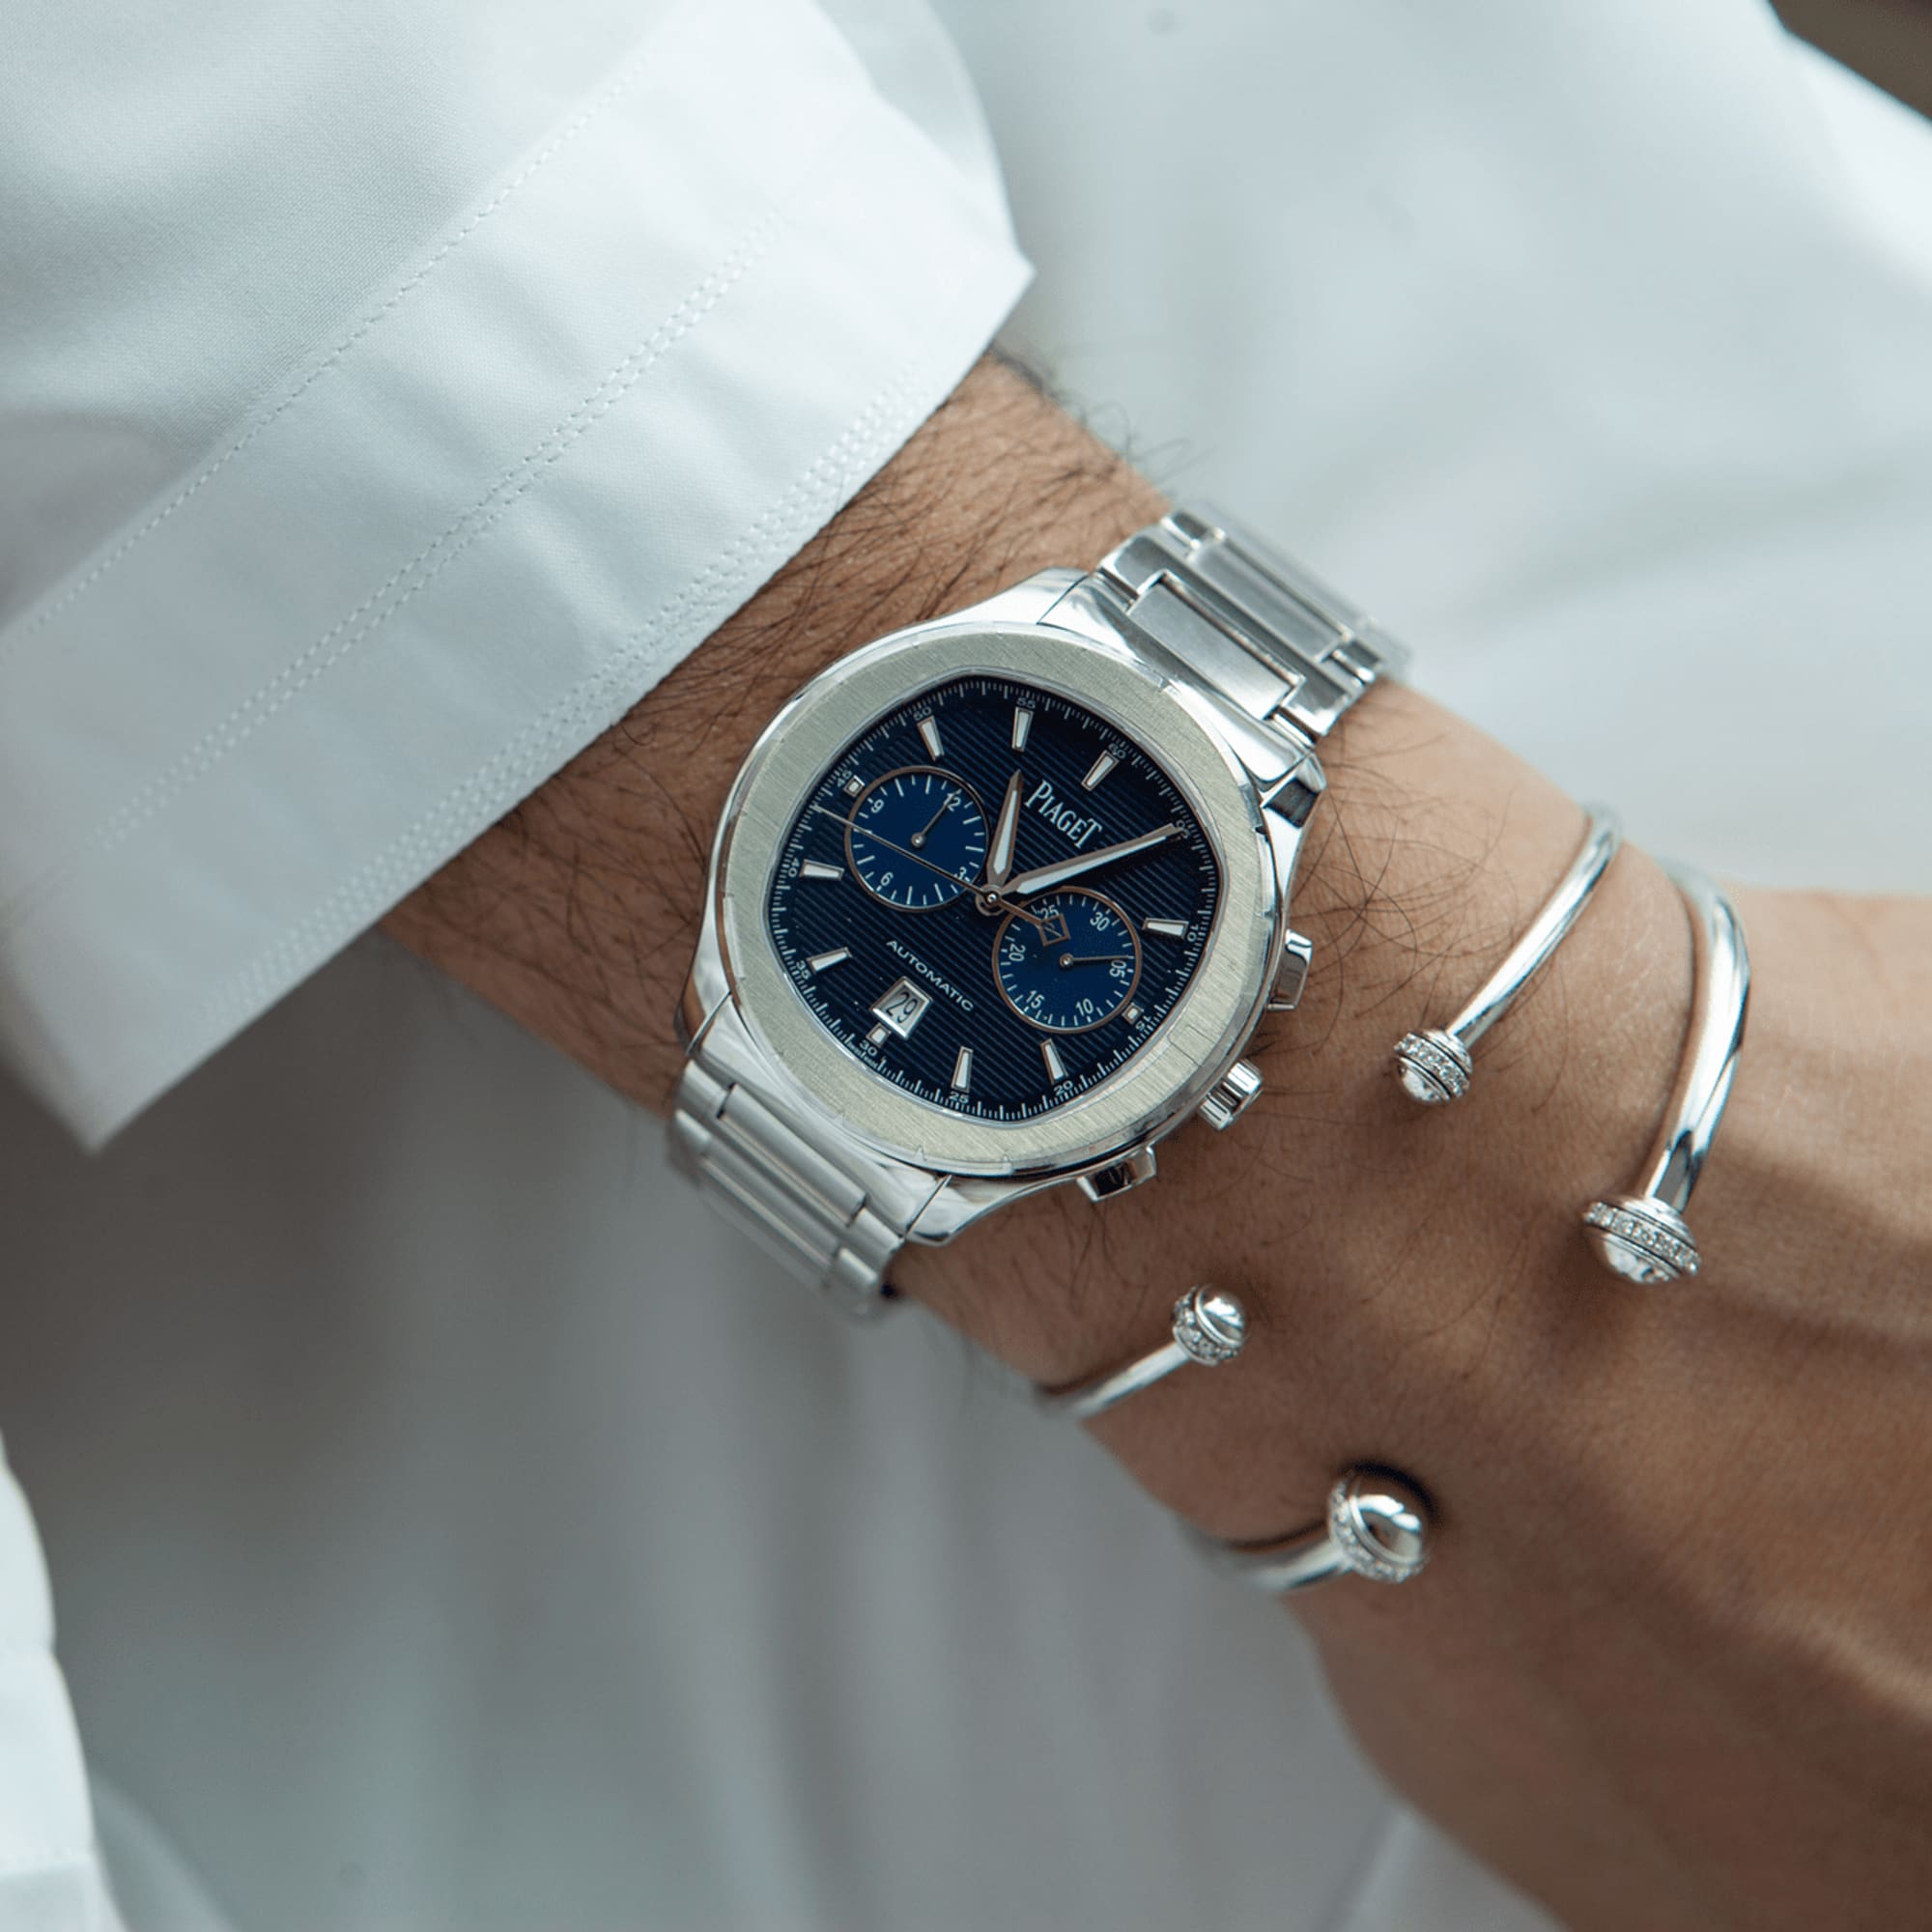 Steel Chronograph Watch - Piaget Luxury Men’s Watch G0A41006